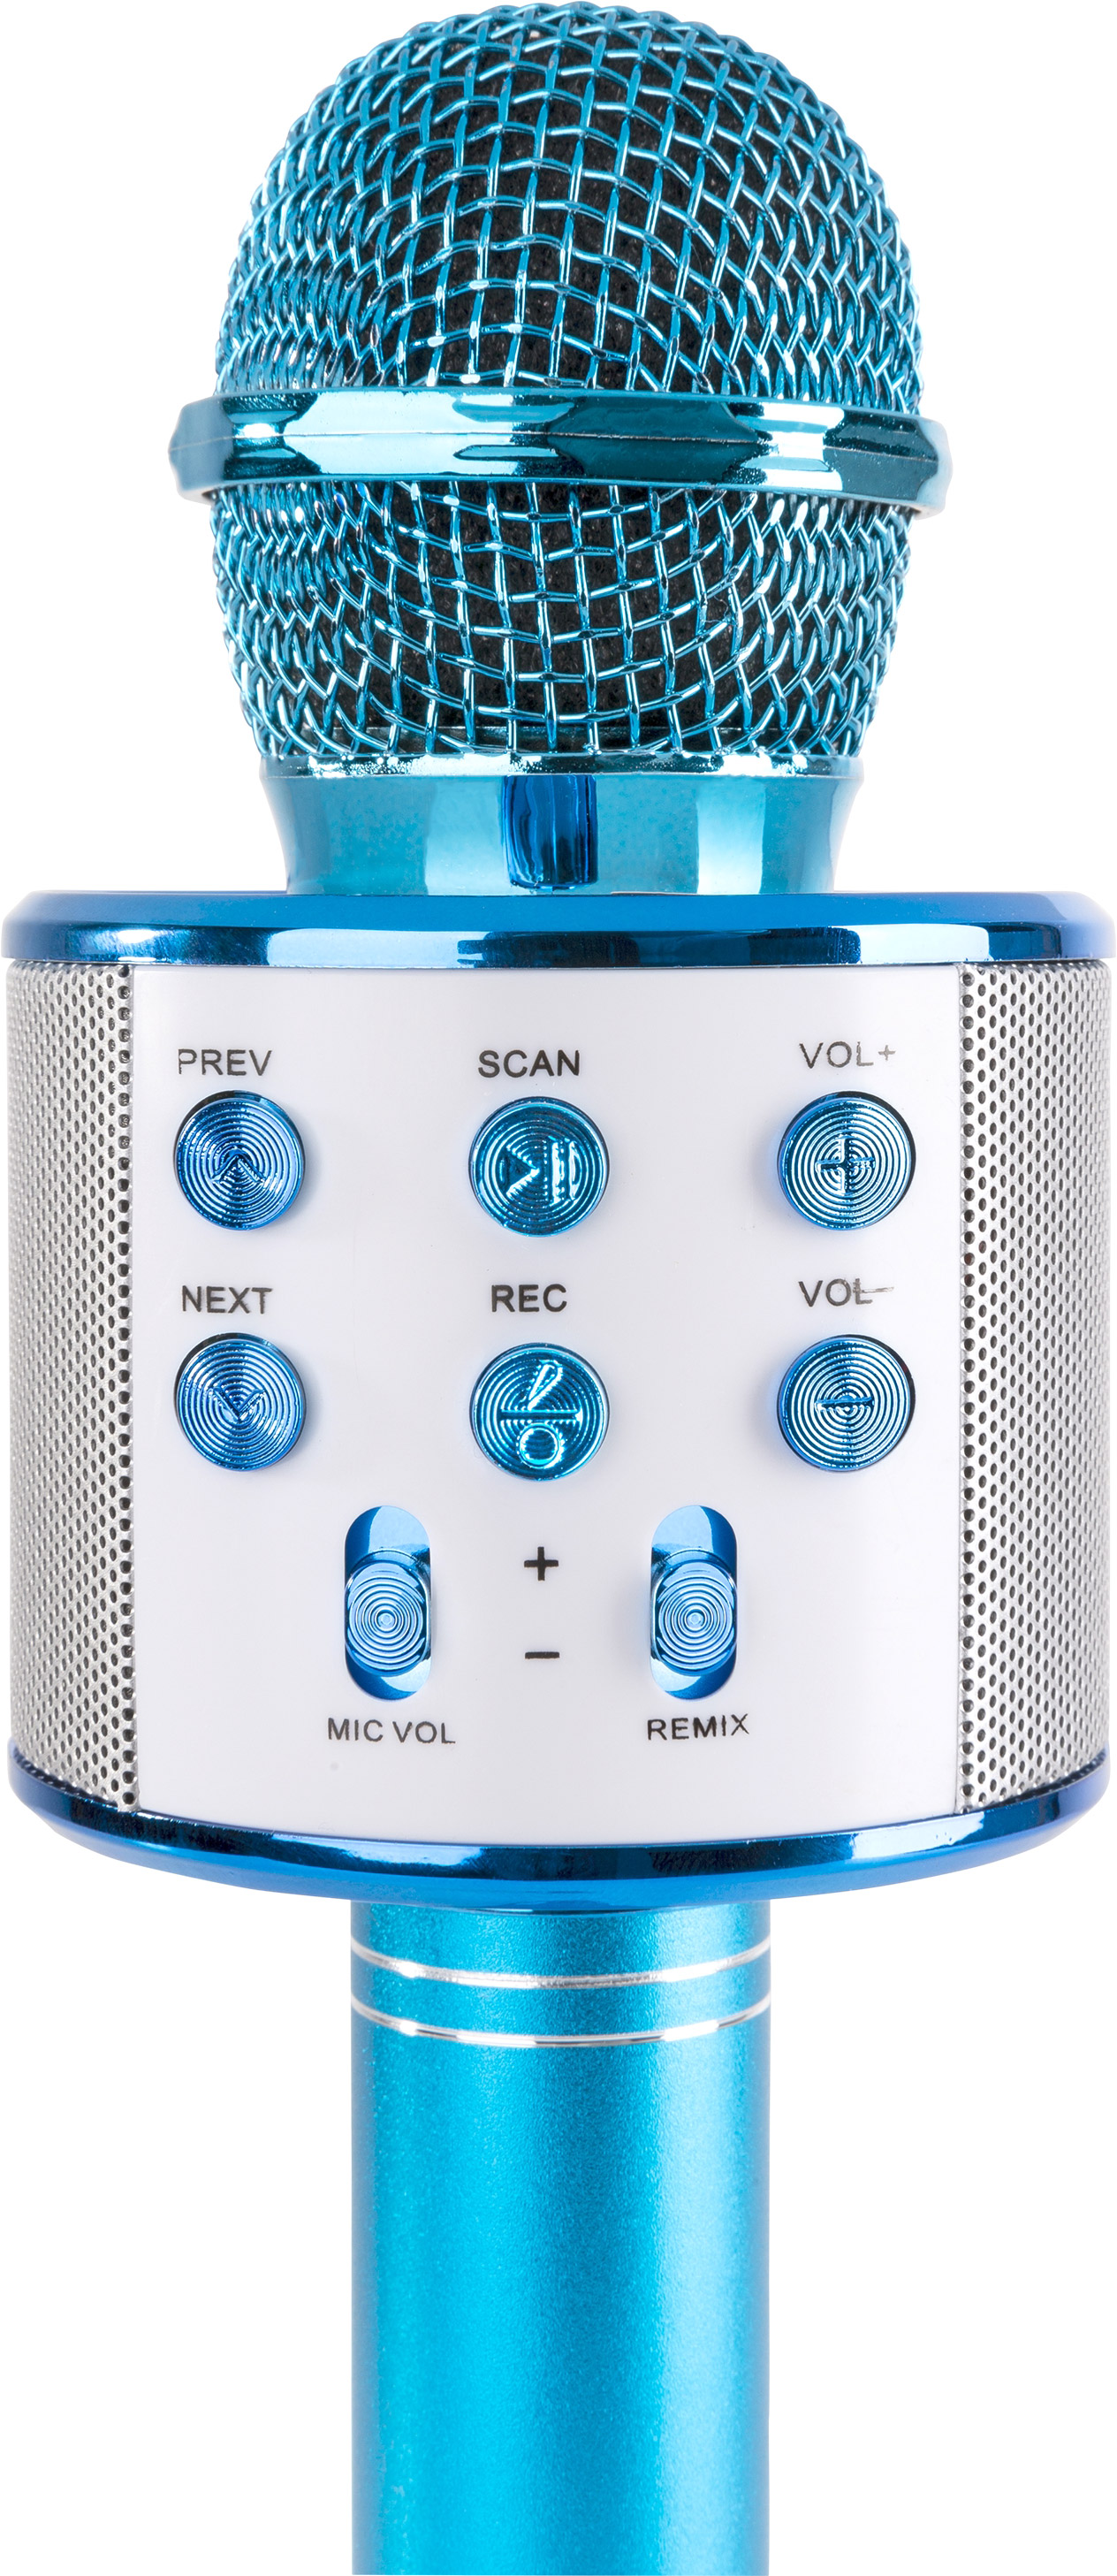 Micro karaoké avec haut-parleur intégré BT/MP3, bleu KM01